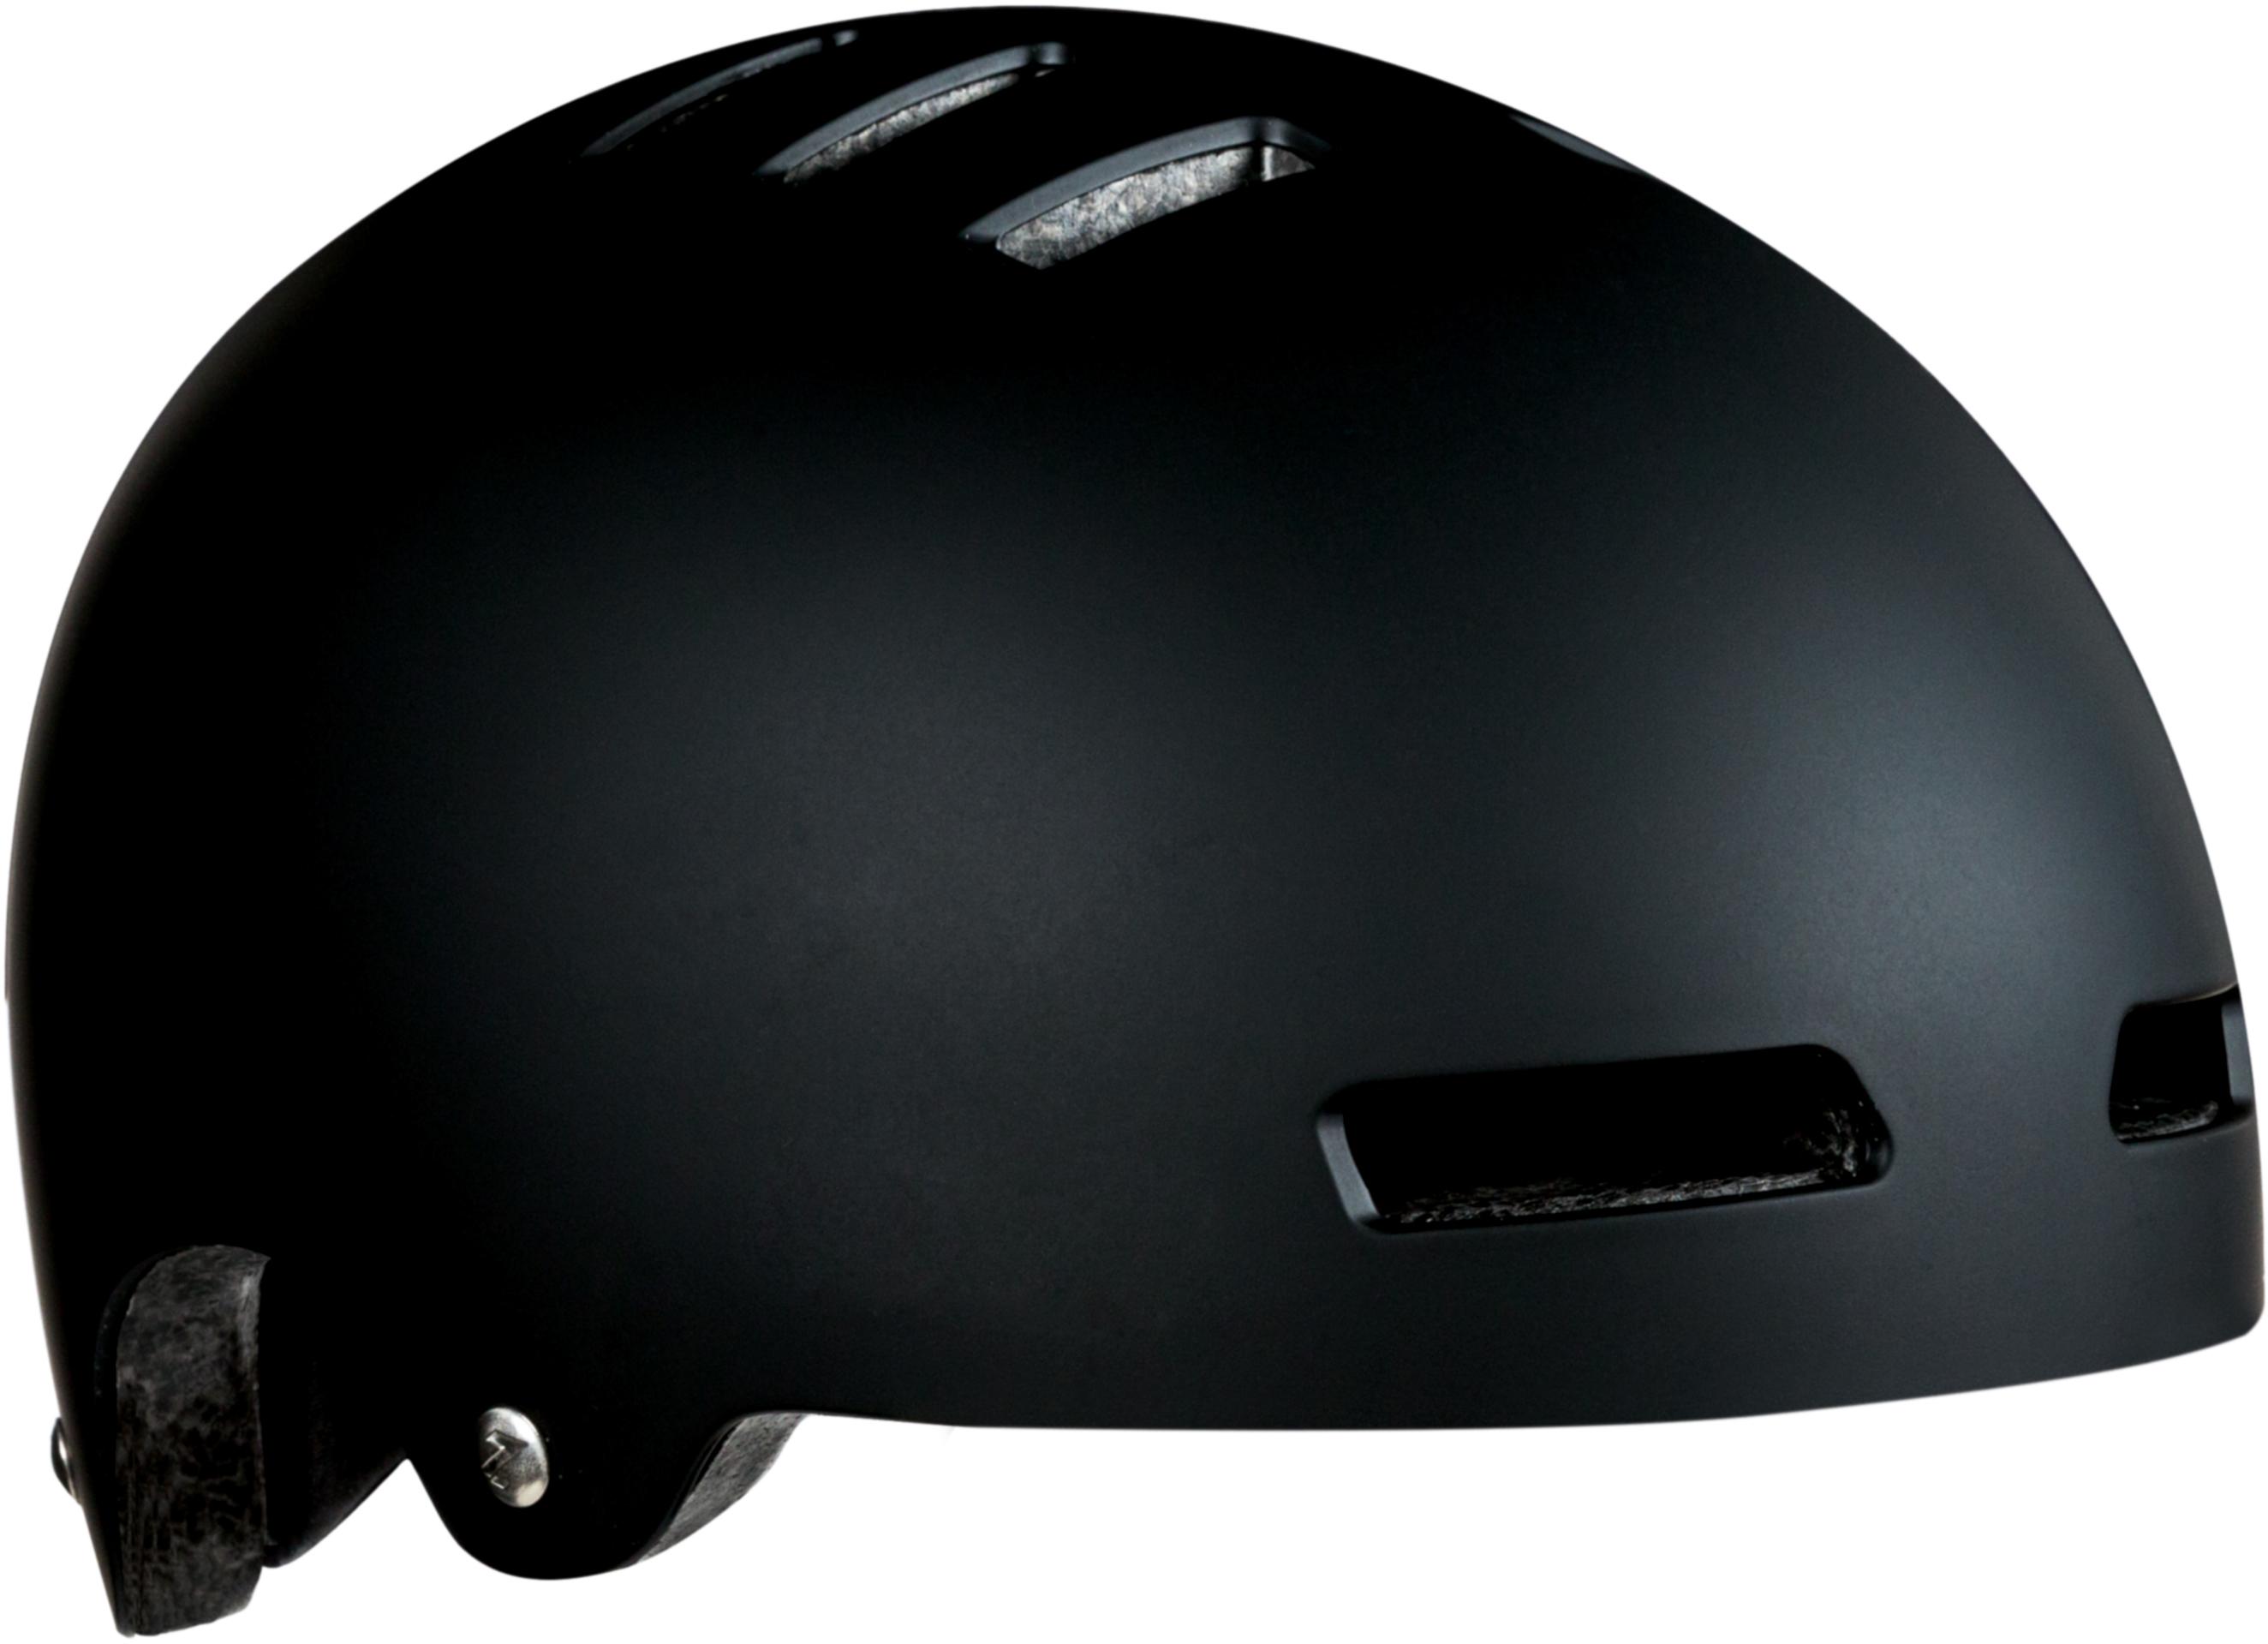 Lazer One Plus Helmet - Black, Medium